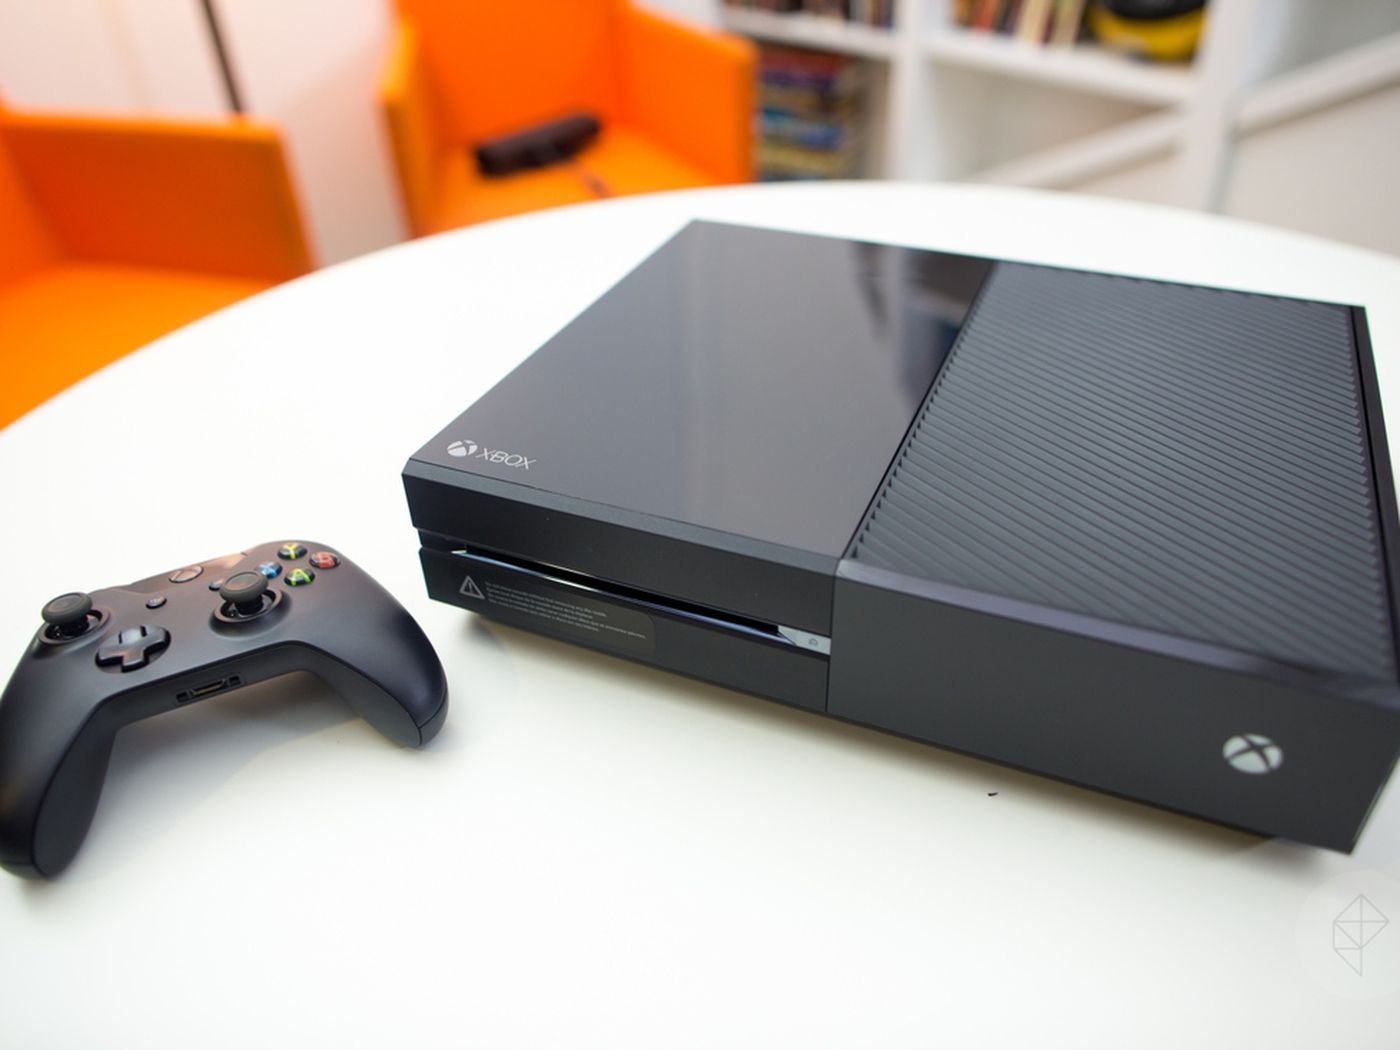 Heb geleerd Geit passie Xbox One March update adds Dolby Digital optical audio support - Polygon